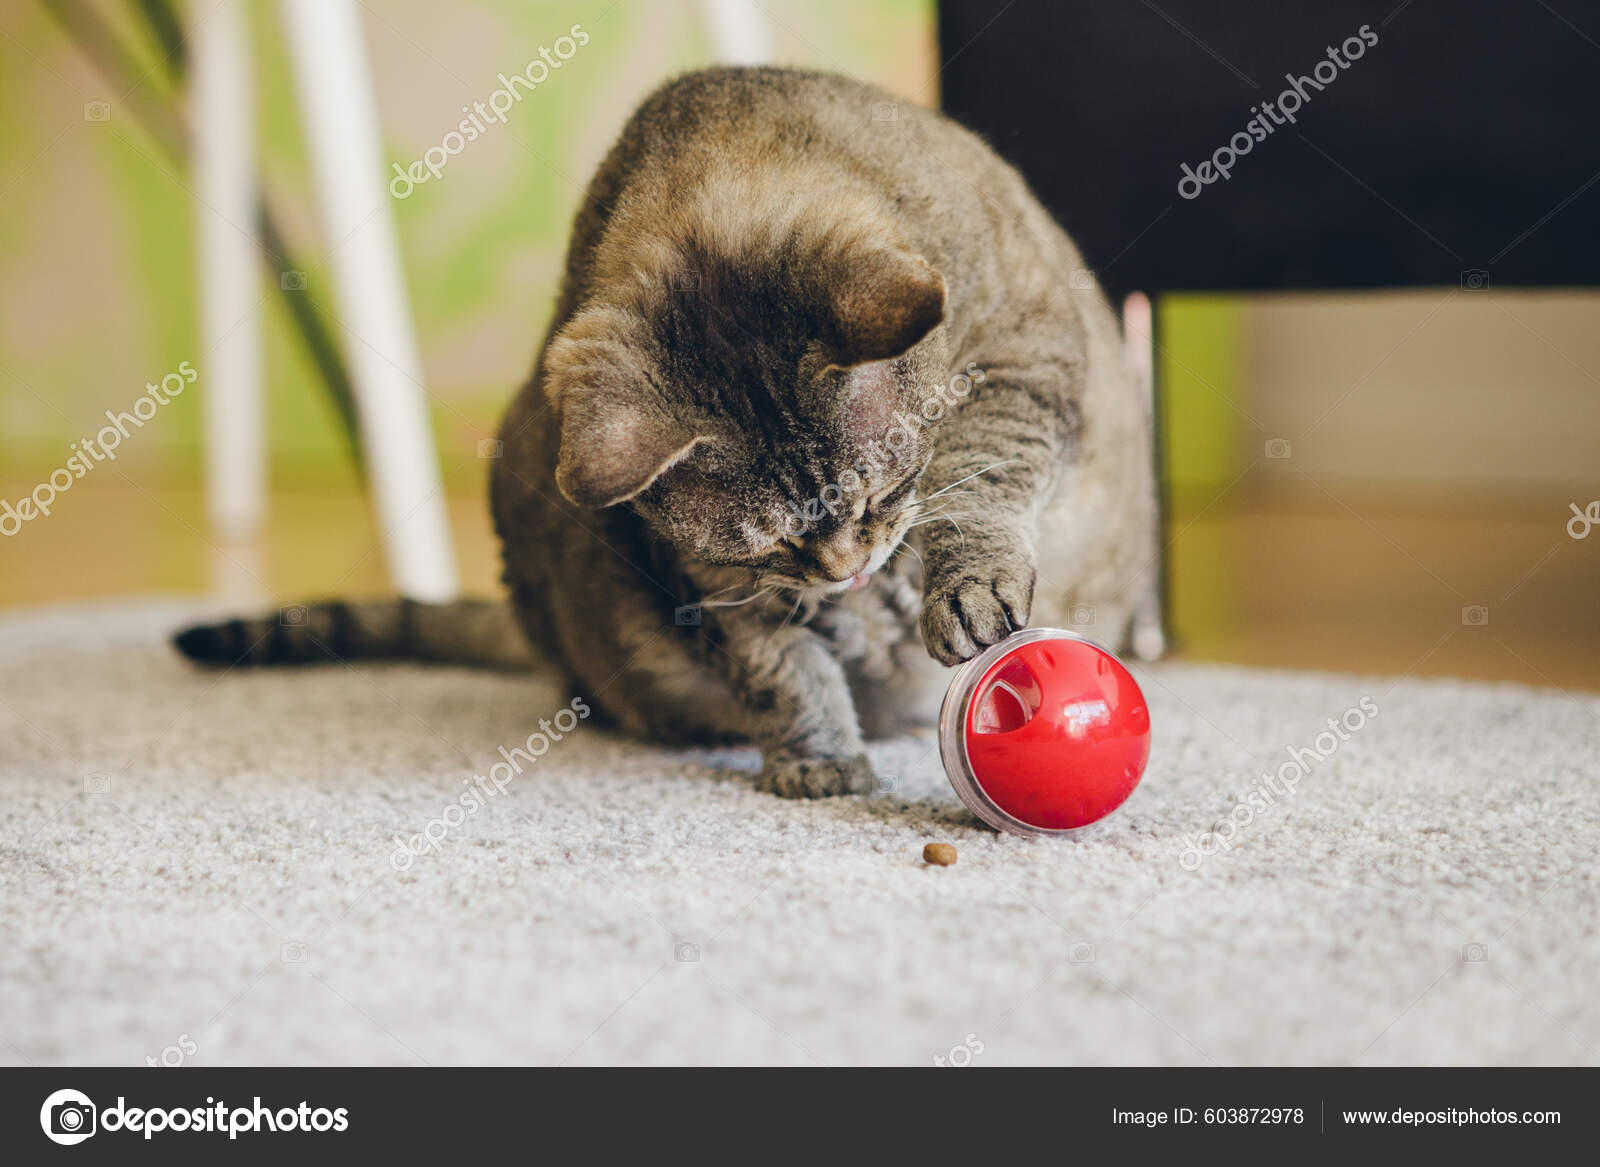 https://st.depositphotos.com/2121325/60387/i/1600/depositphotos_603872978-stock-photo-mature-fat-cat-sitting-carpet.jpg